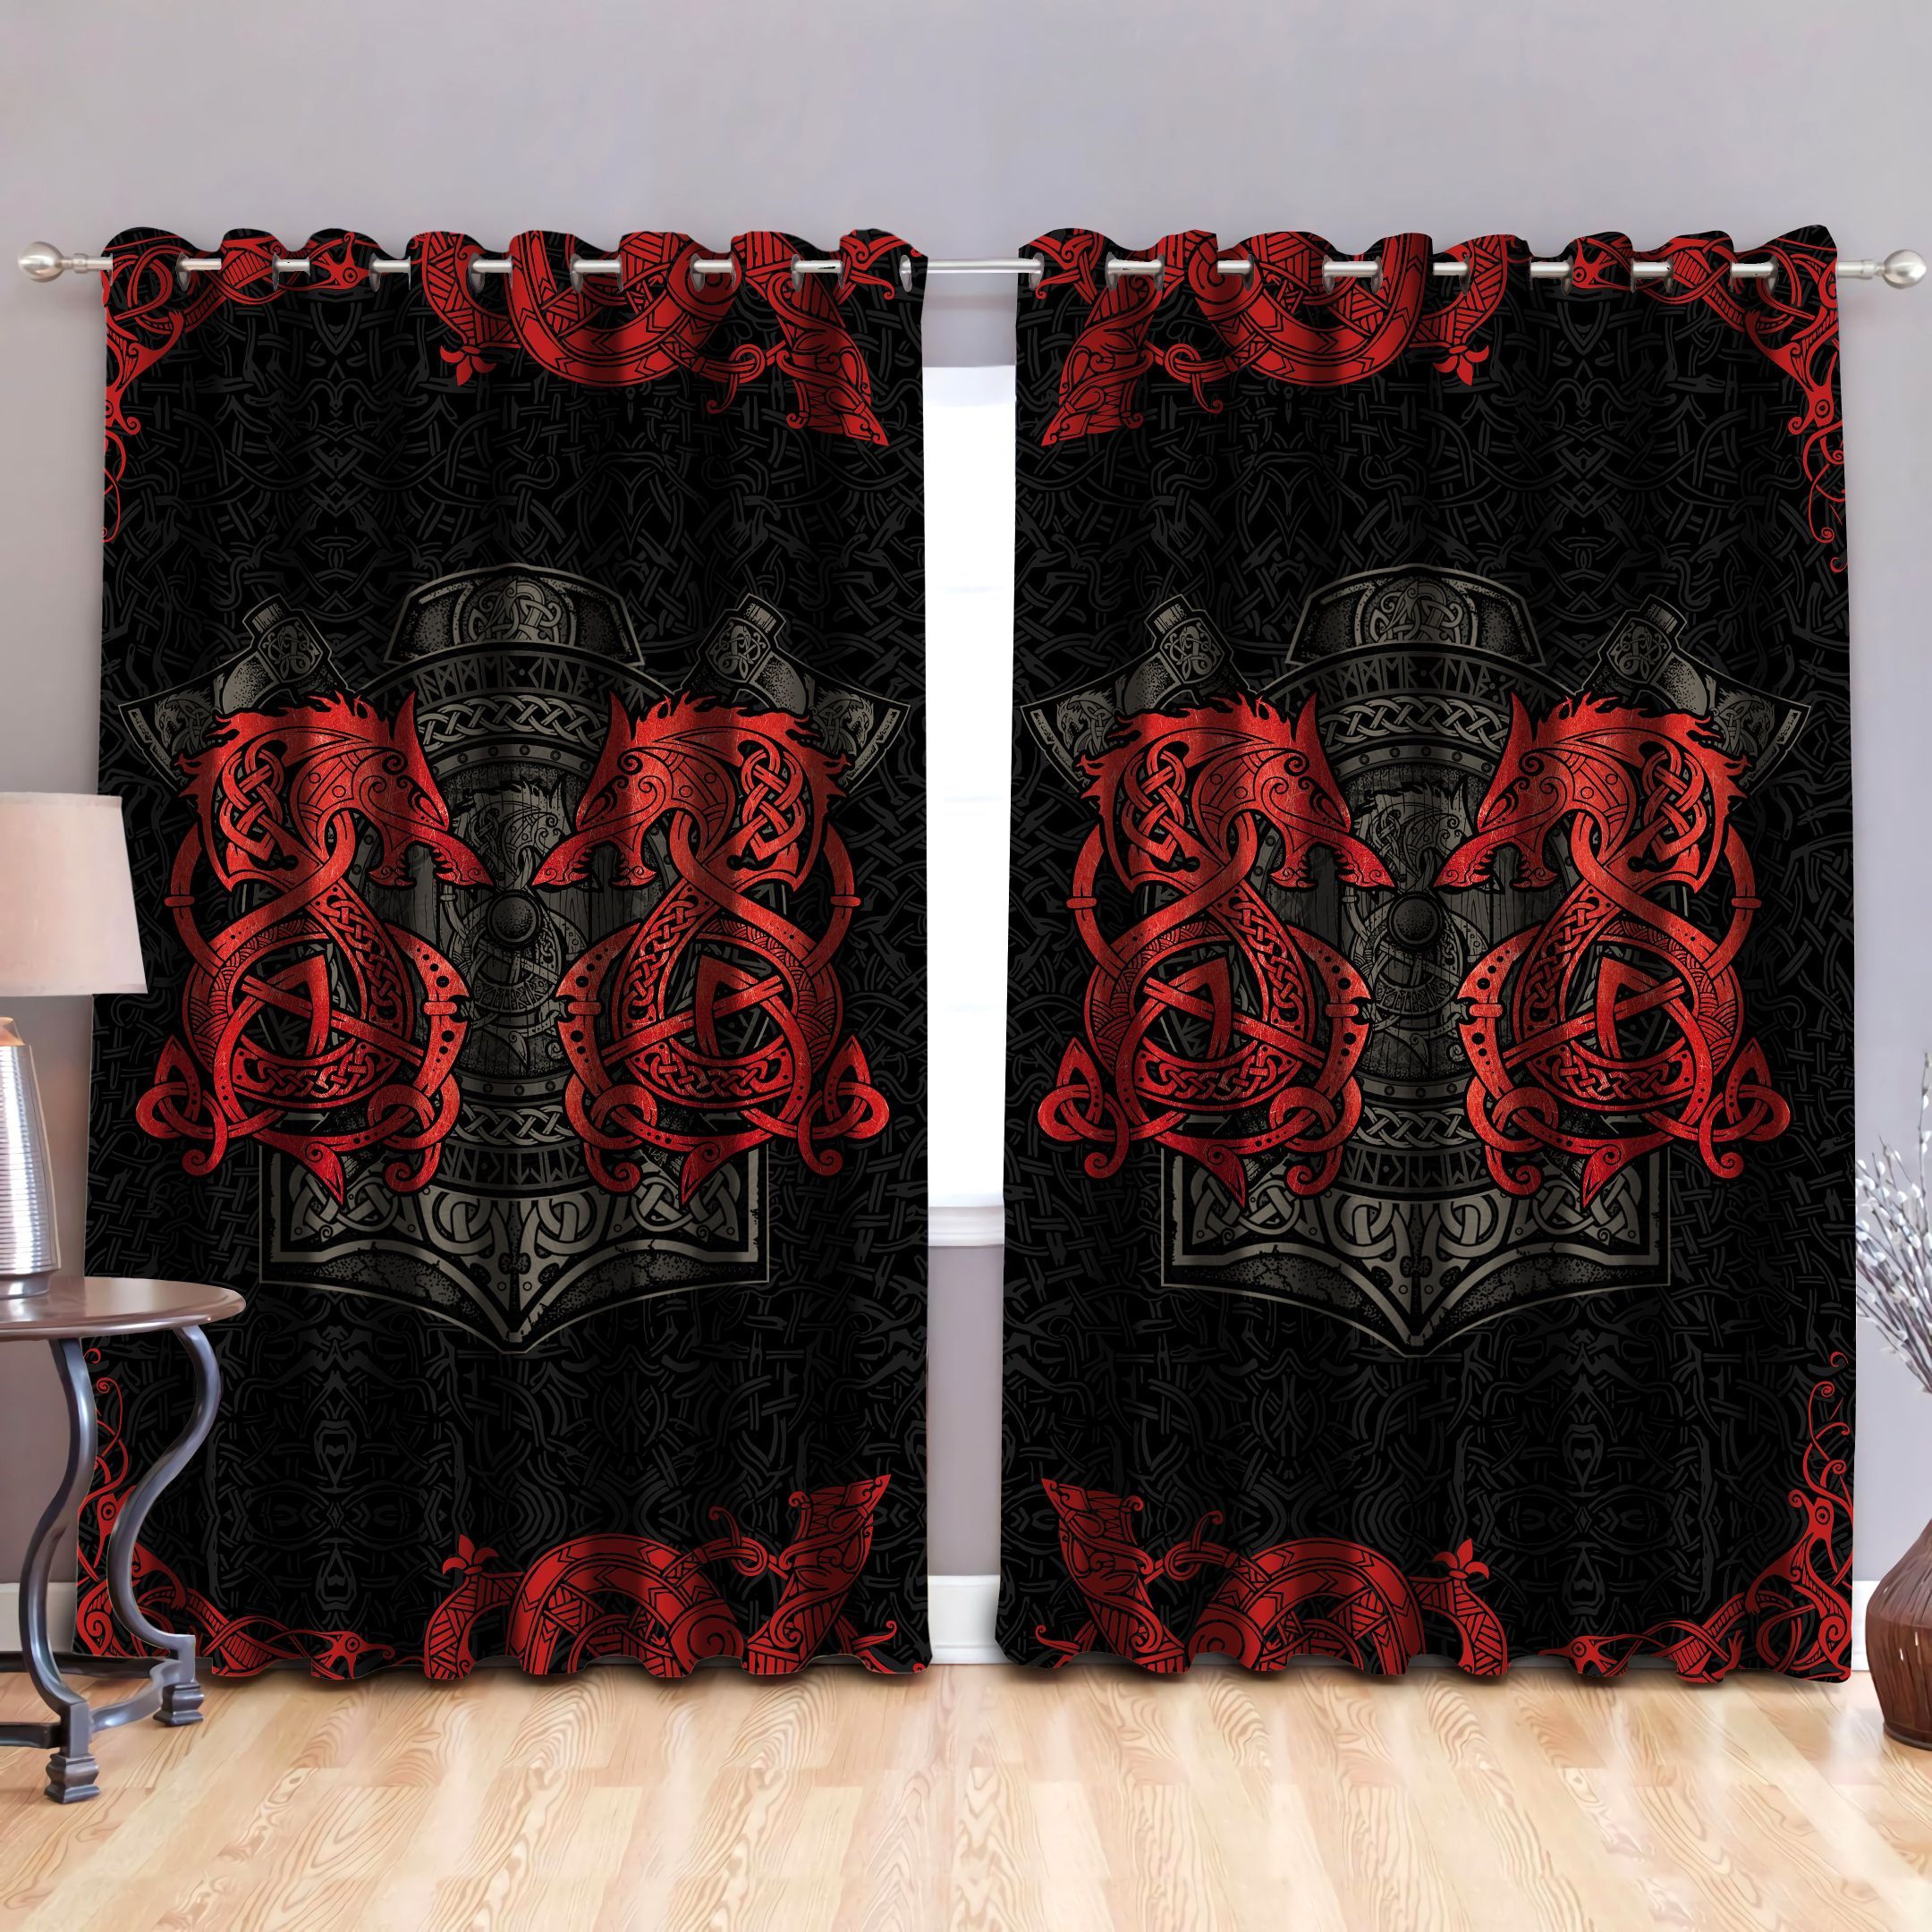 Red Viking Dragon Black Background Printed Window Curtain - Dragon Blackout Curtains